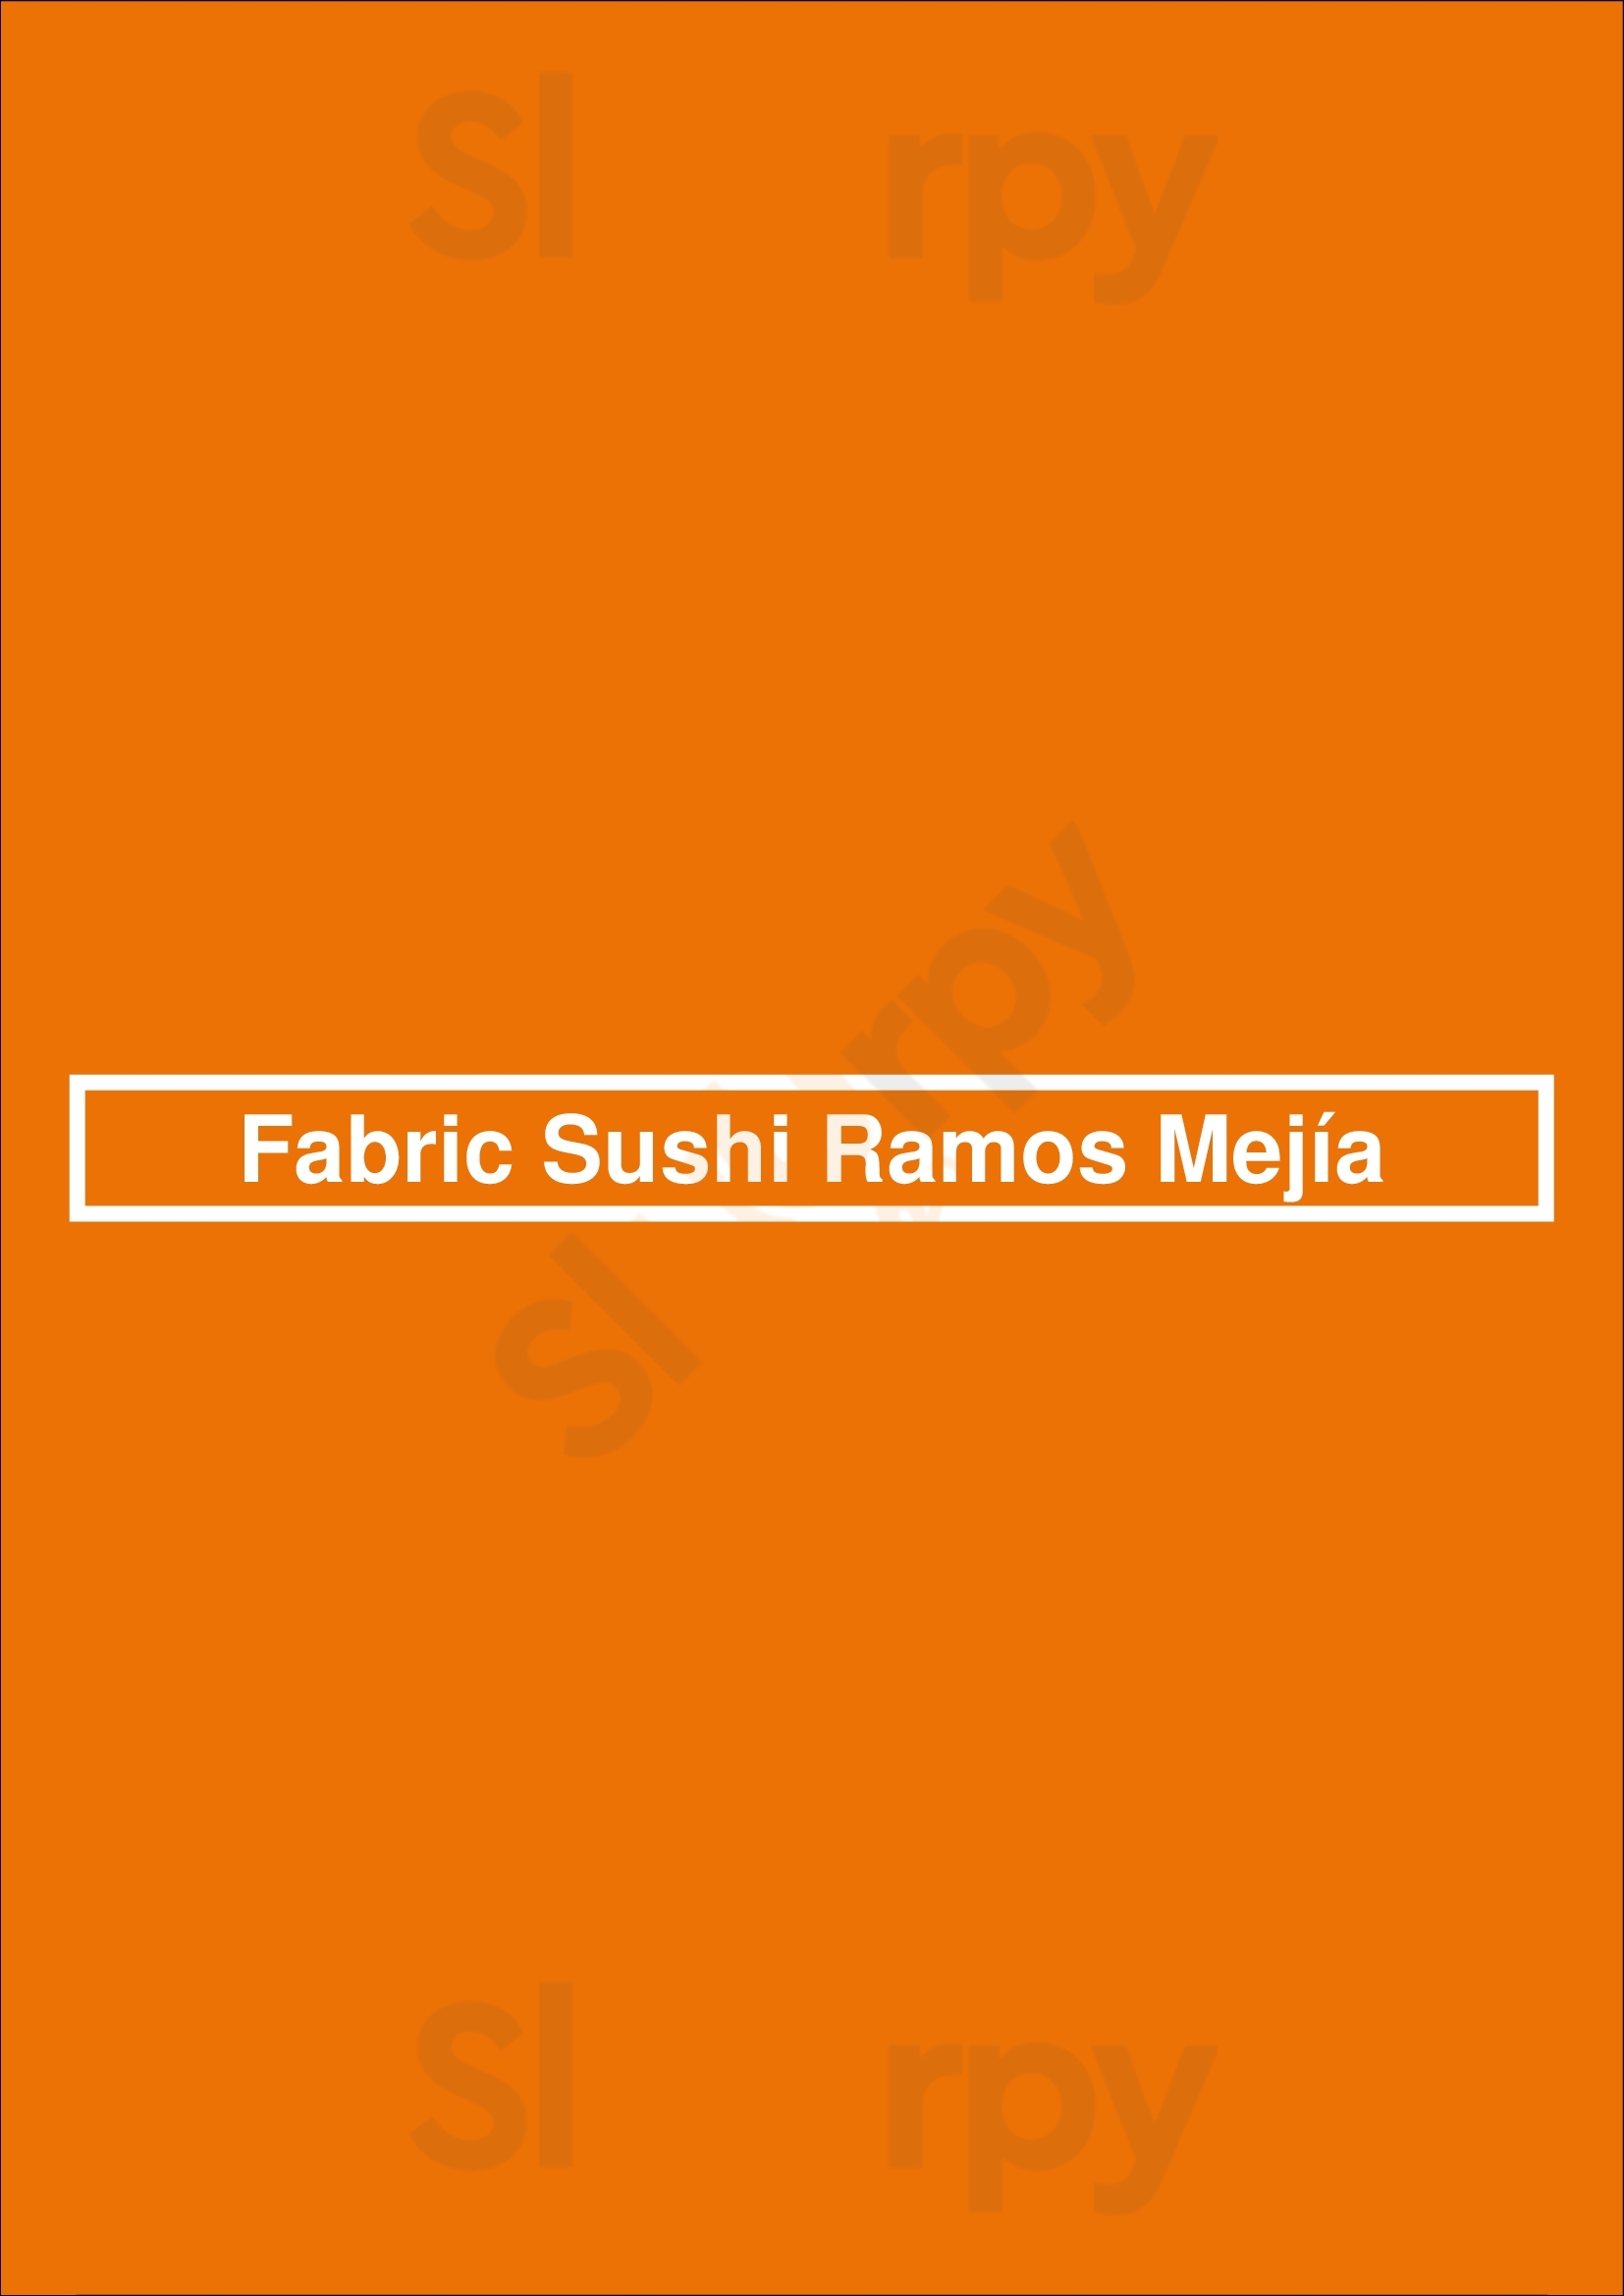 Fabric Sushi Ramos Mejía Ramos Mejía Menu - 1